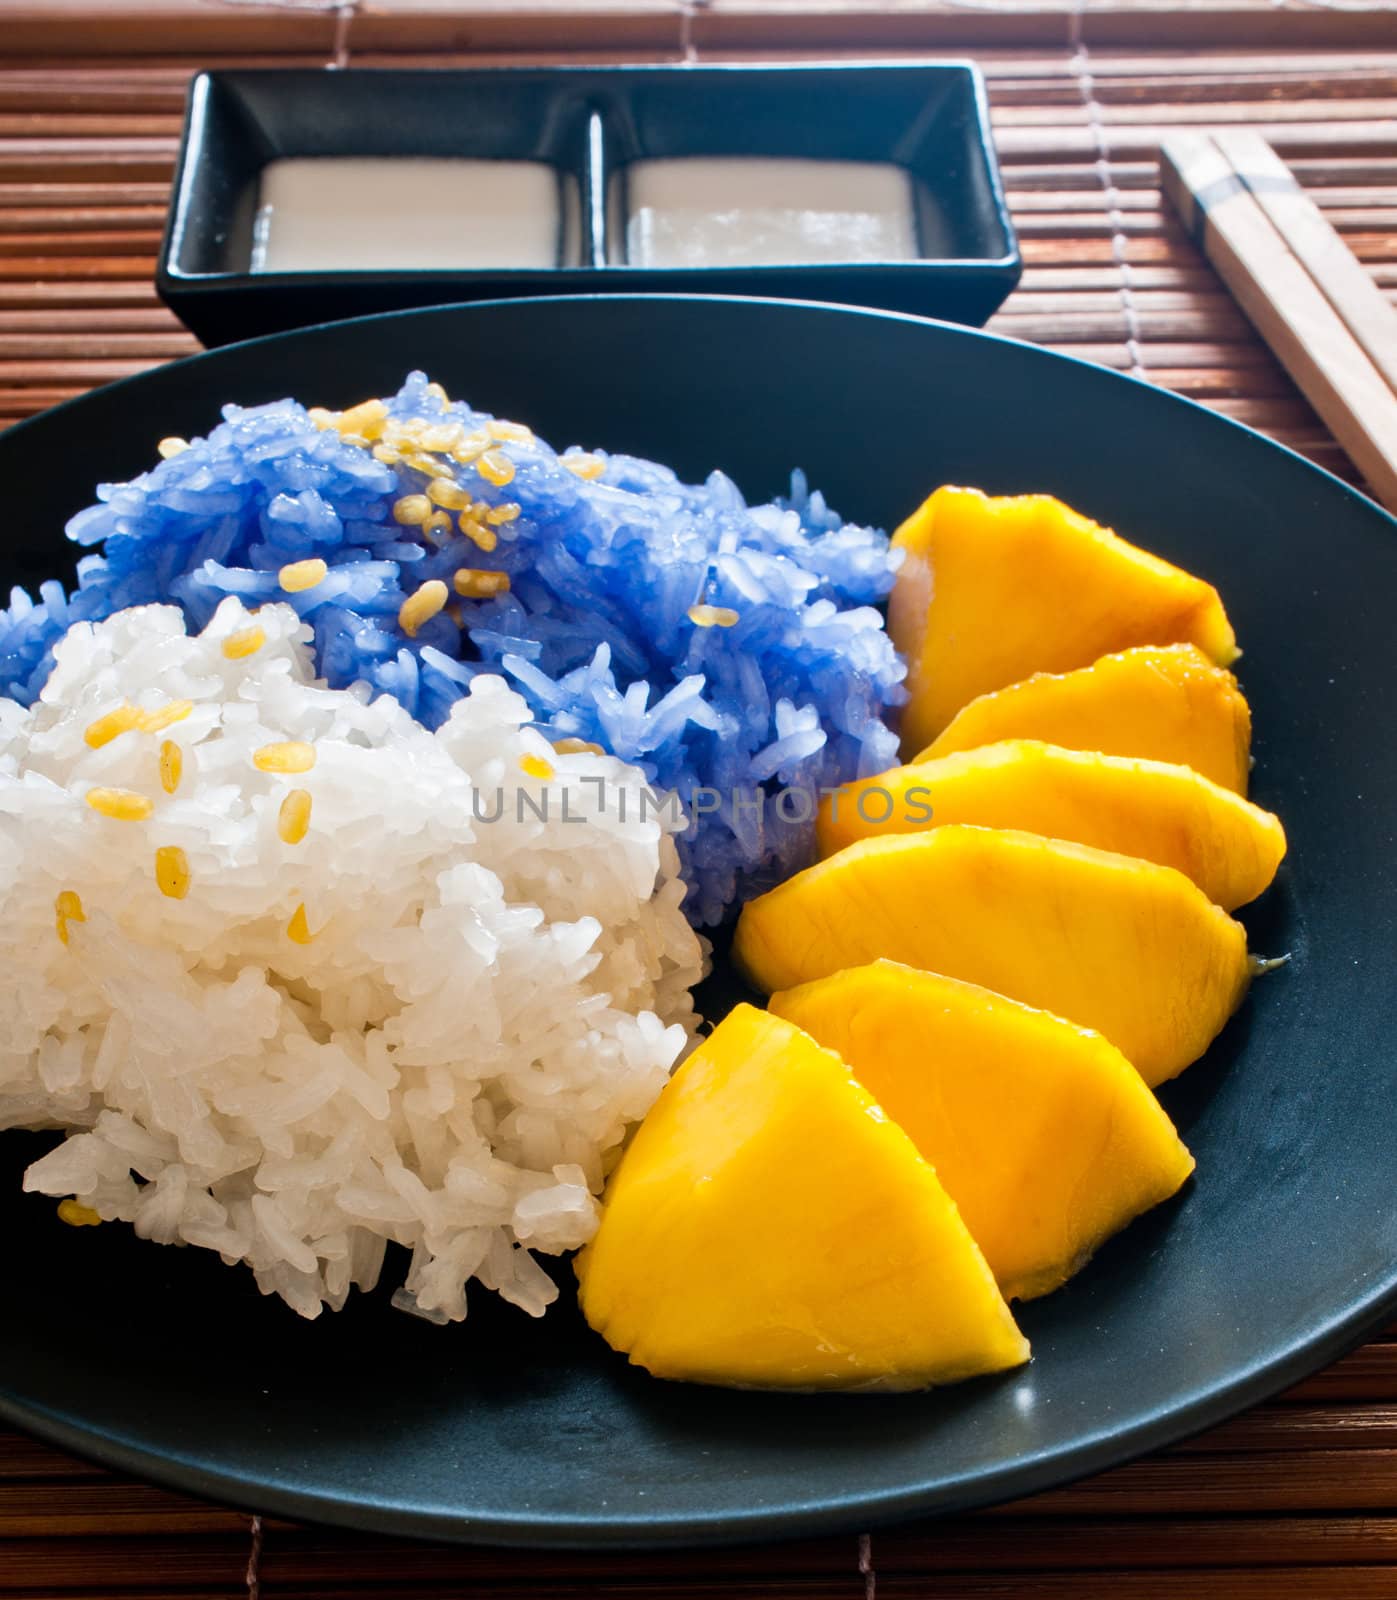 Thai style dessert, glutinous rice eat with mangoes